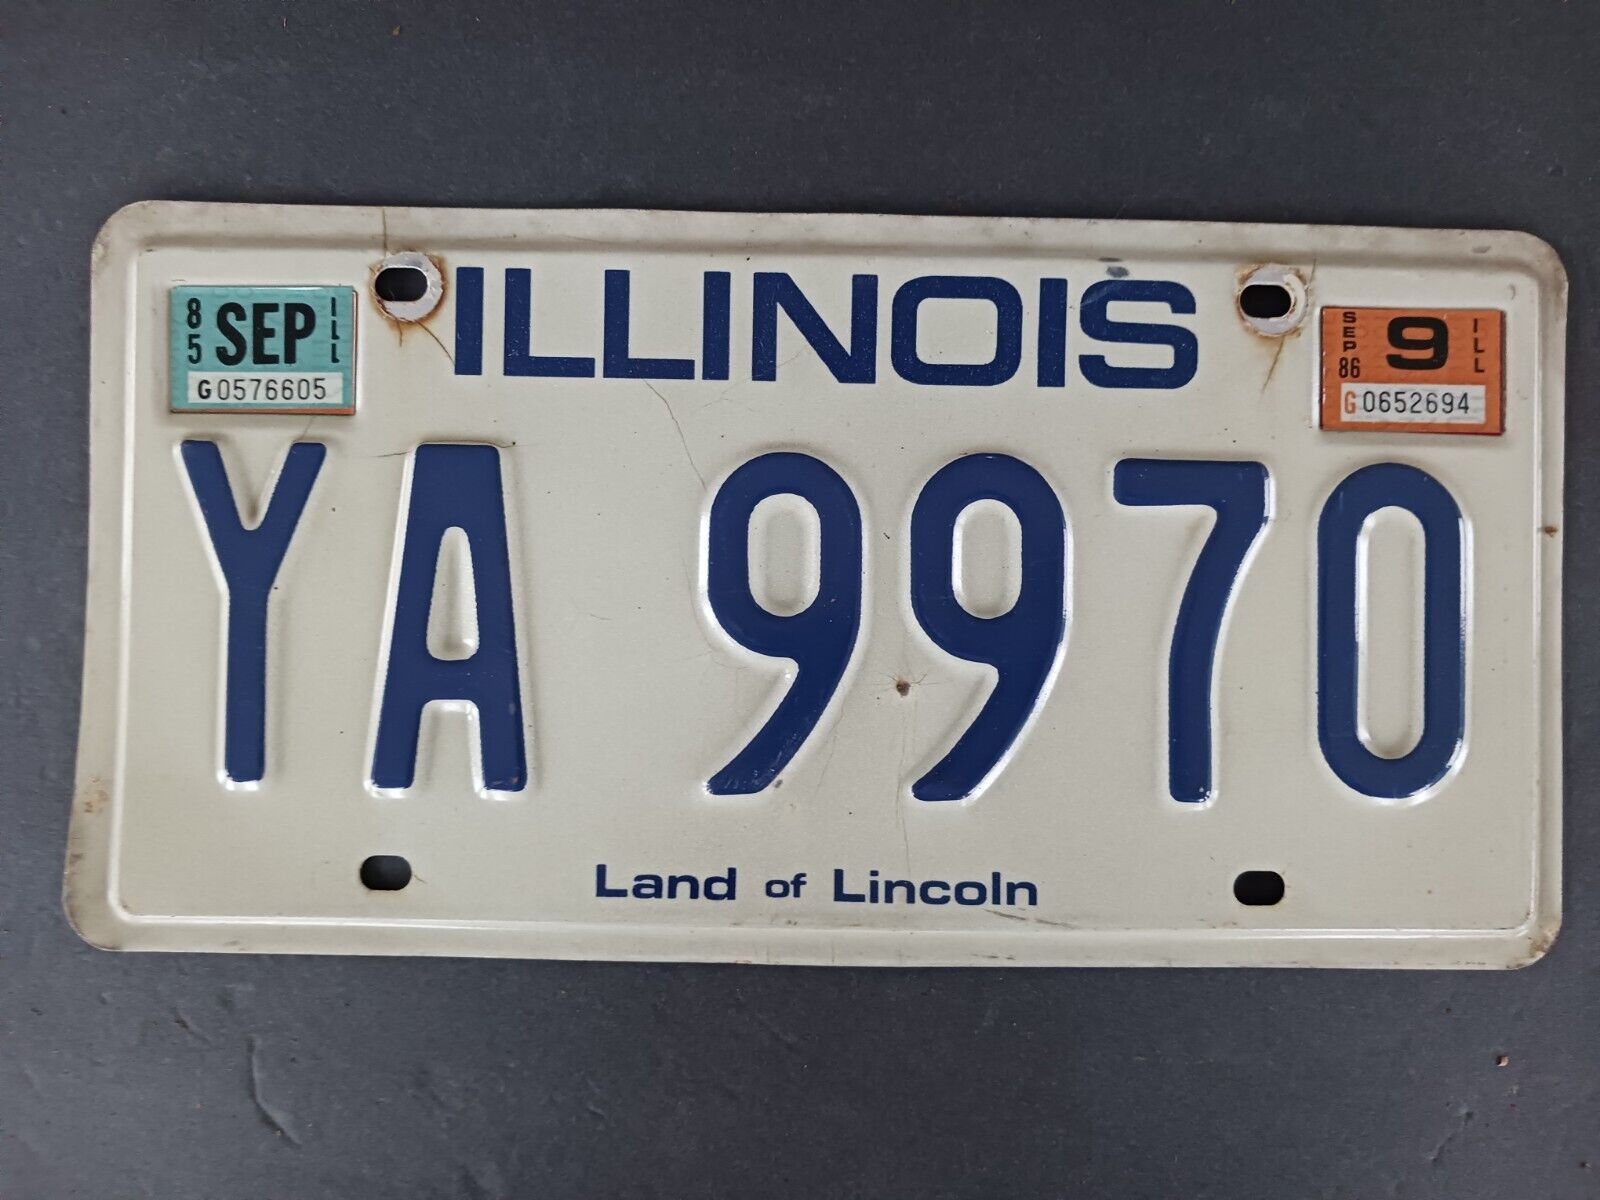 🔥 1985 Illinois IL License Plate YA 9970 🔥